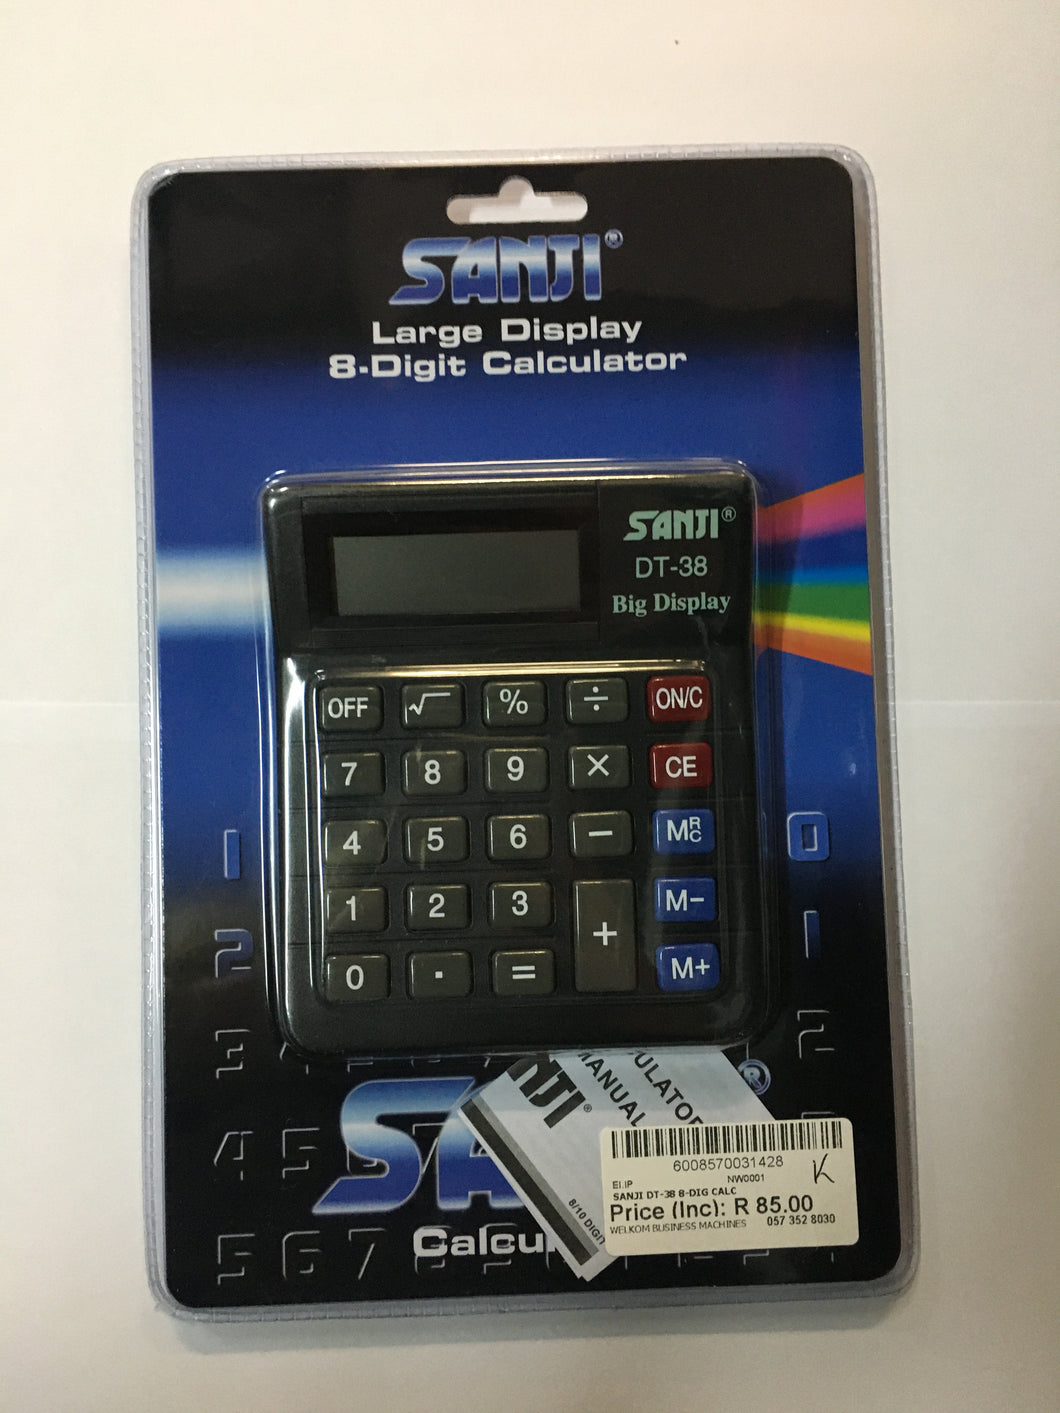 Sanji dit-38 8 digit calculator